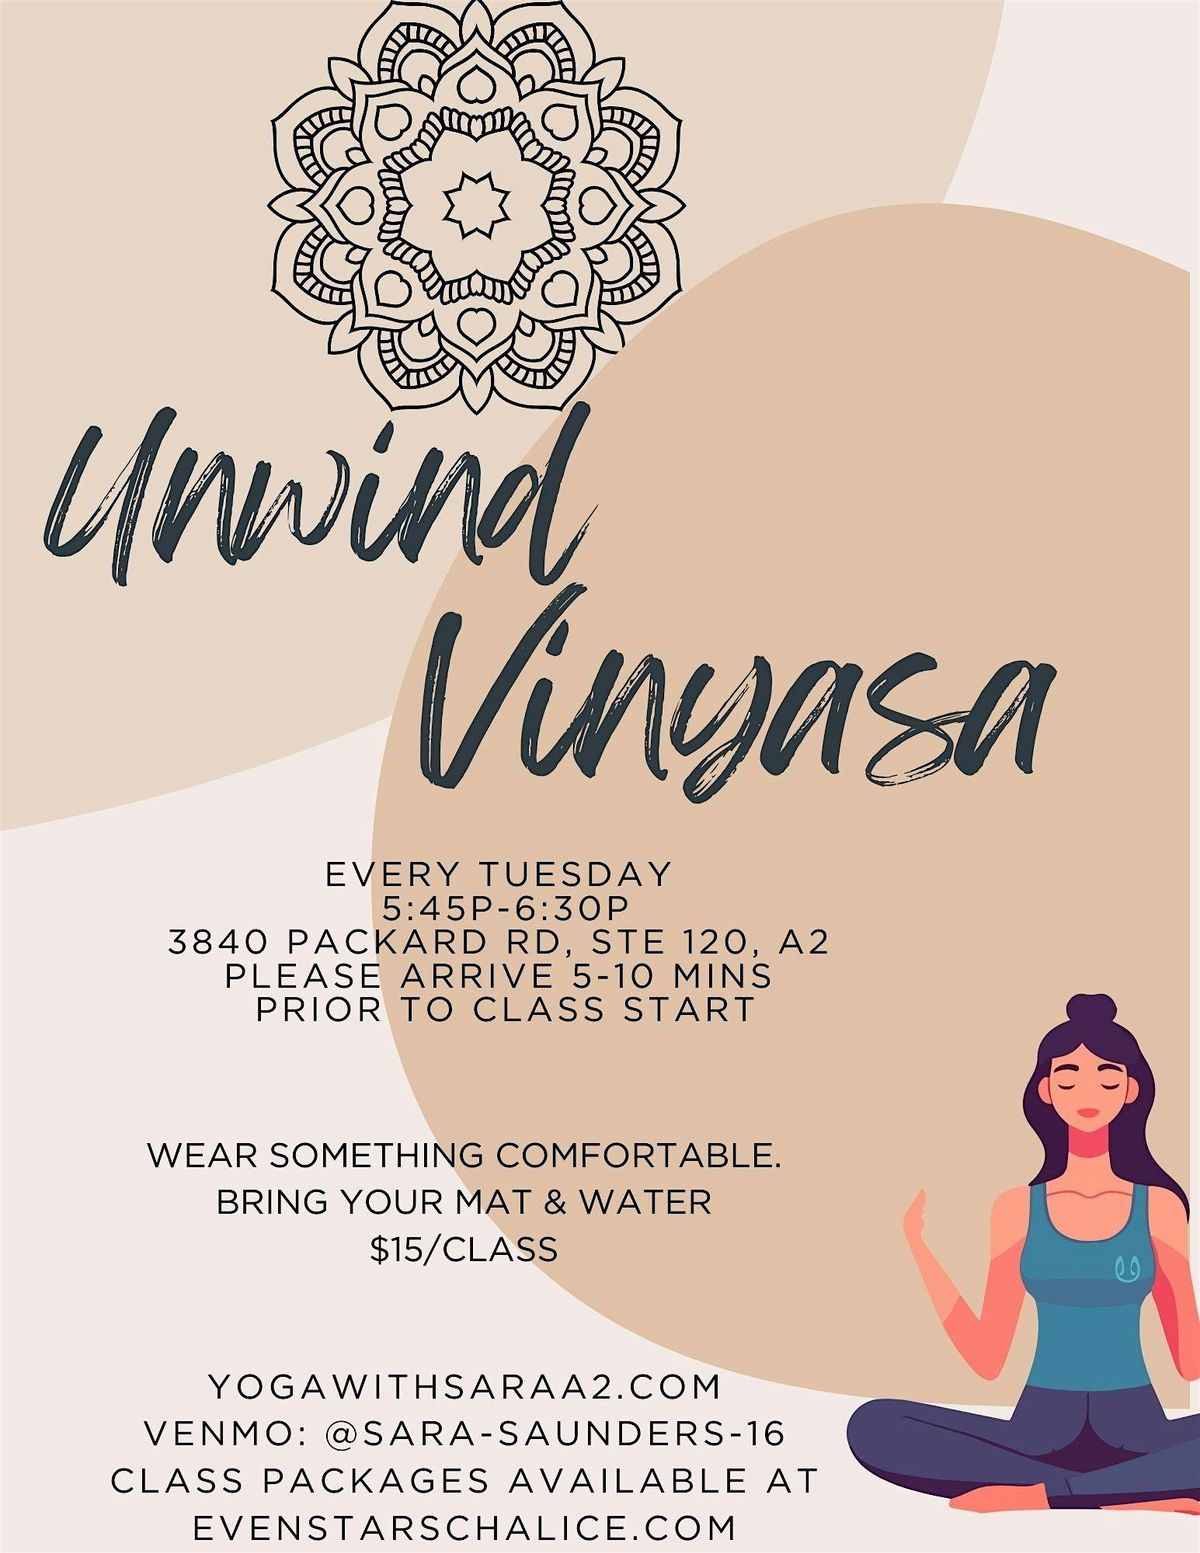 Unwind Vinyasa Yoga